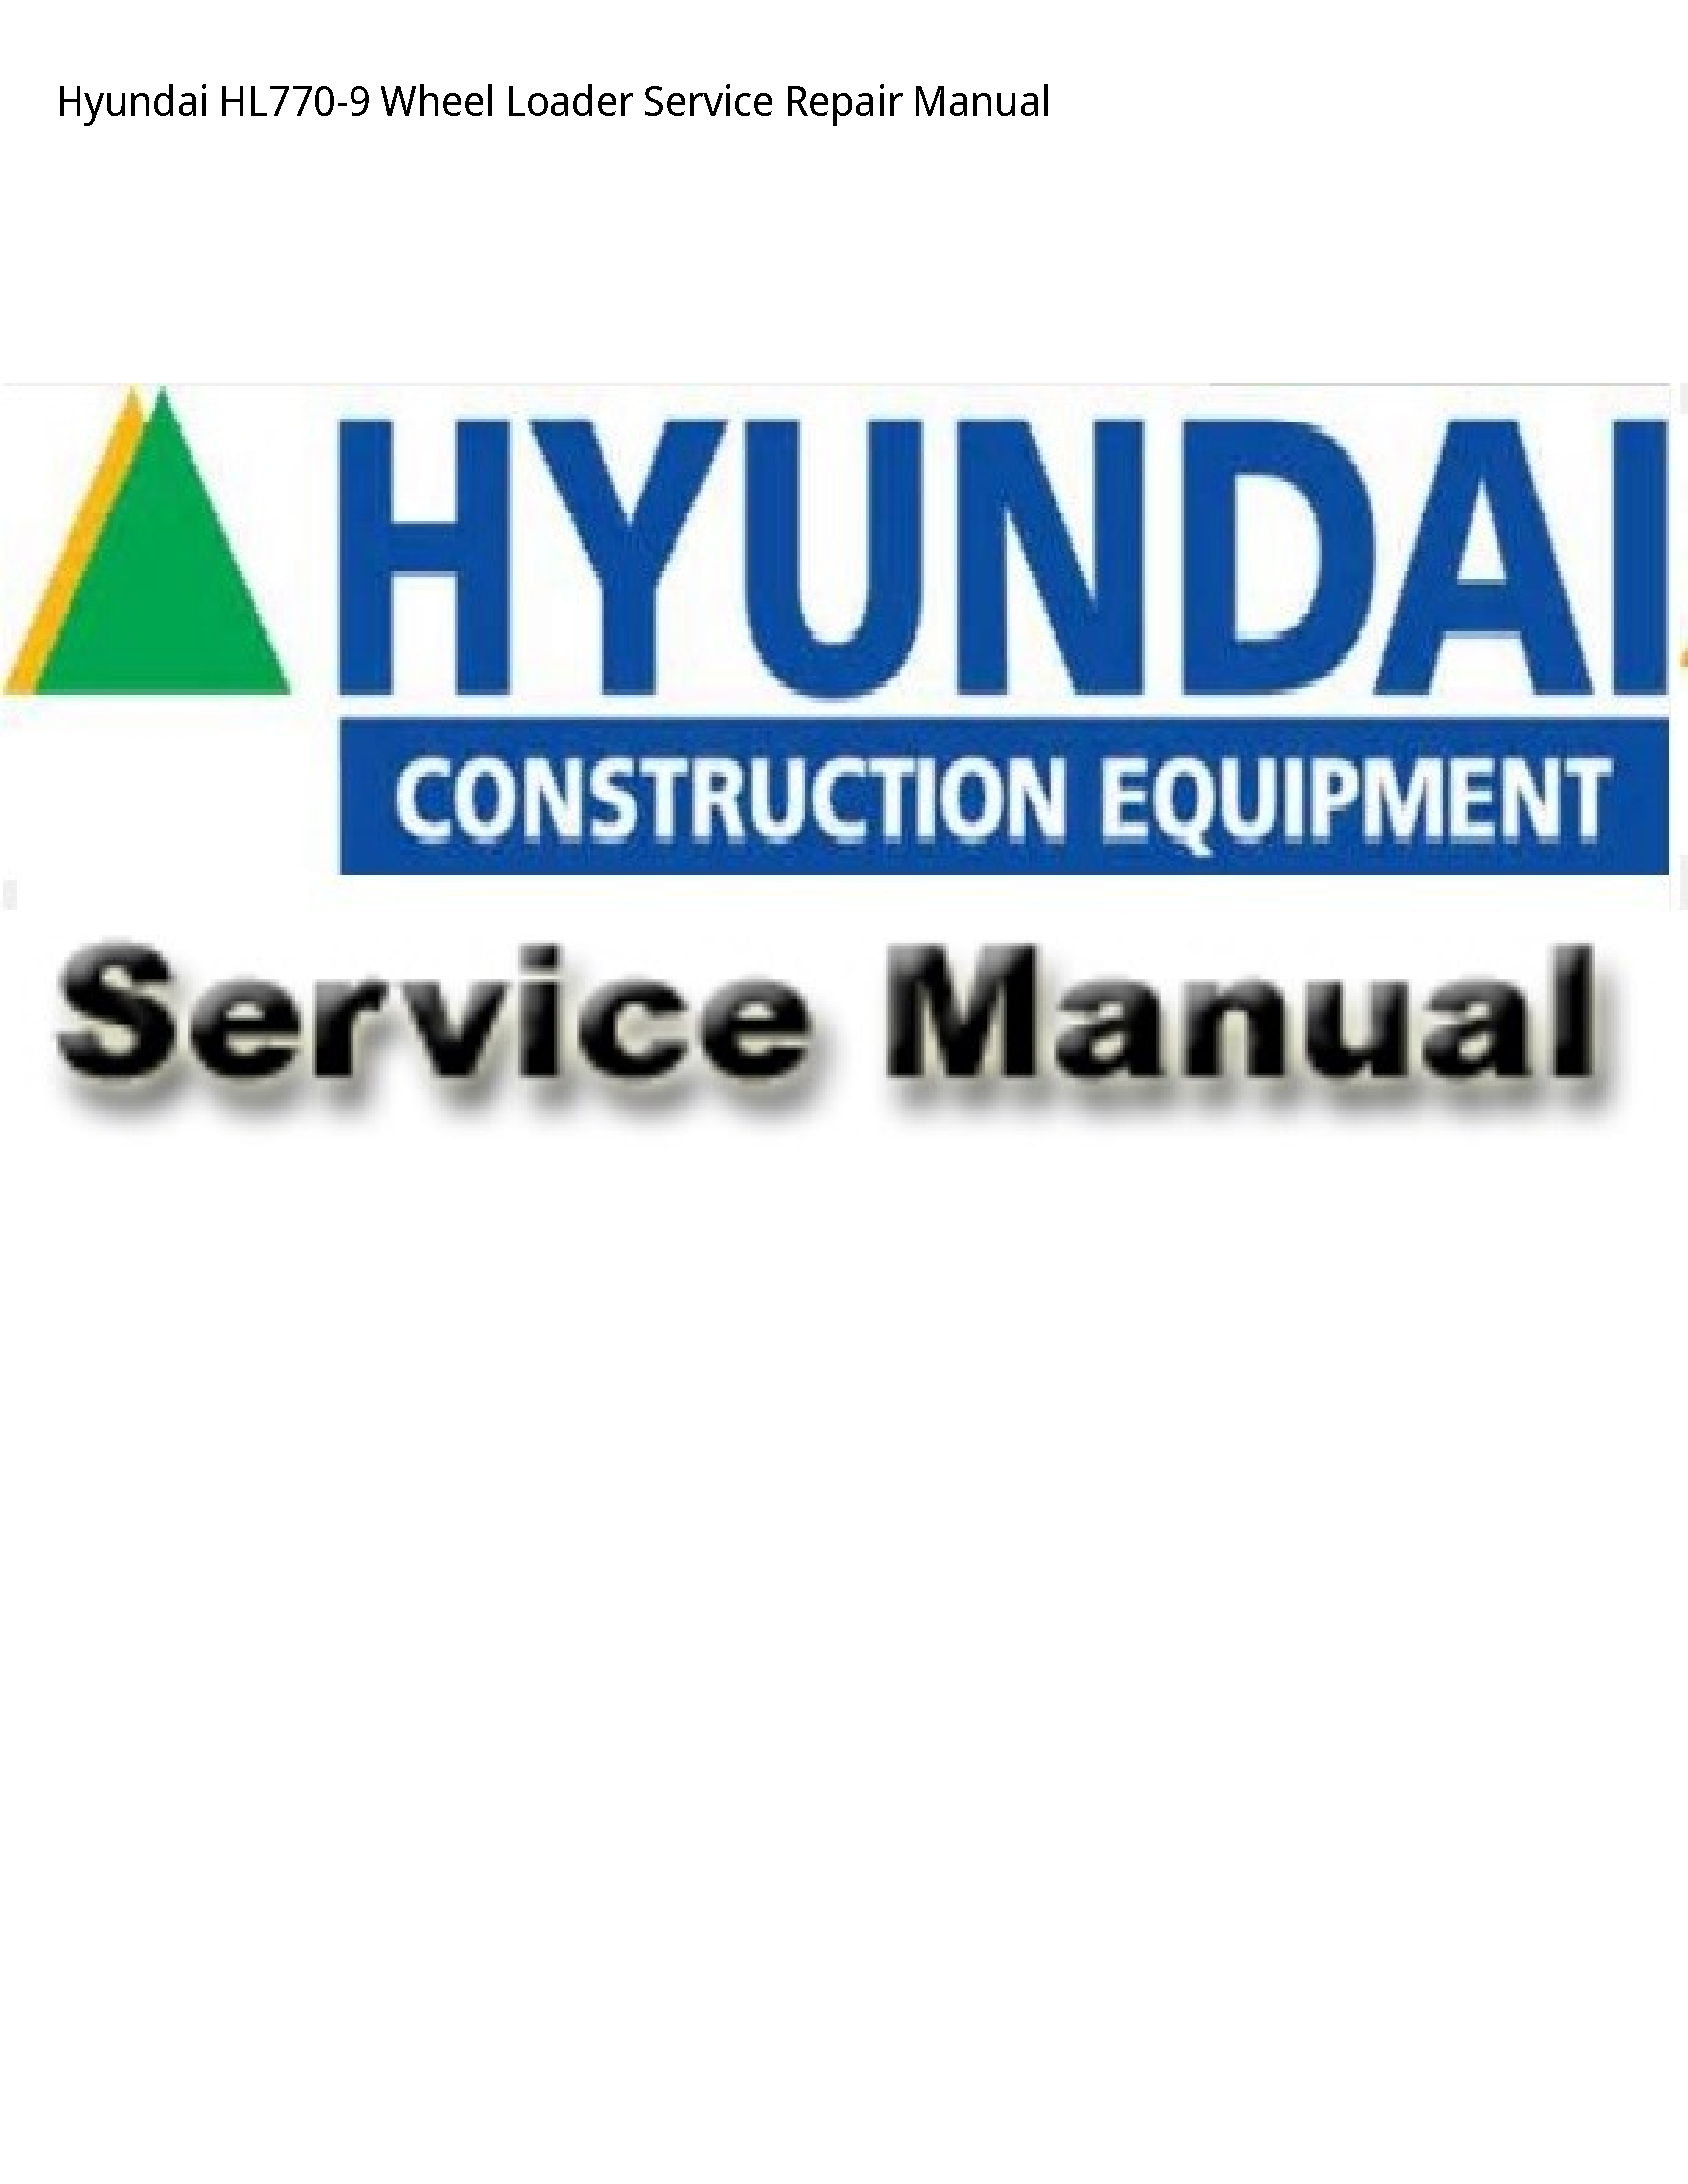 Hyundai HL770-9 Wheel Loader manual